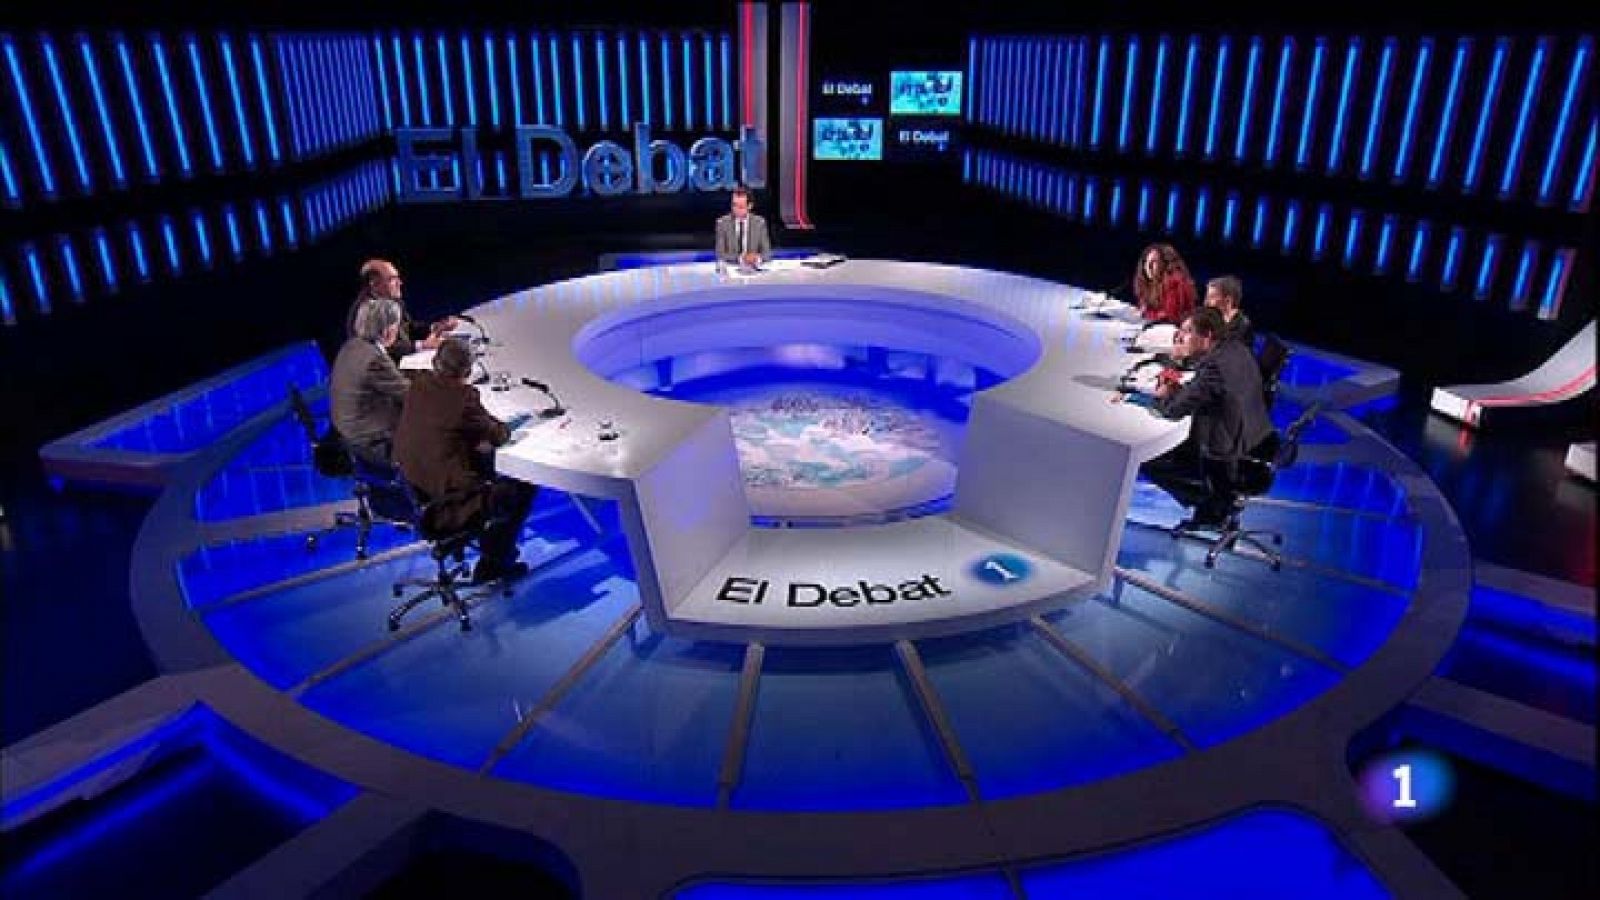 El debat de La 1: El Debat de la 1 - Debat  | RTVE Play